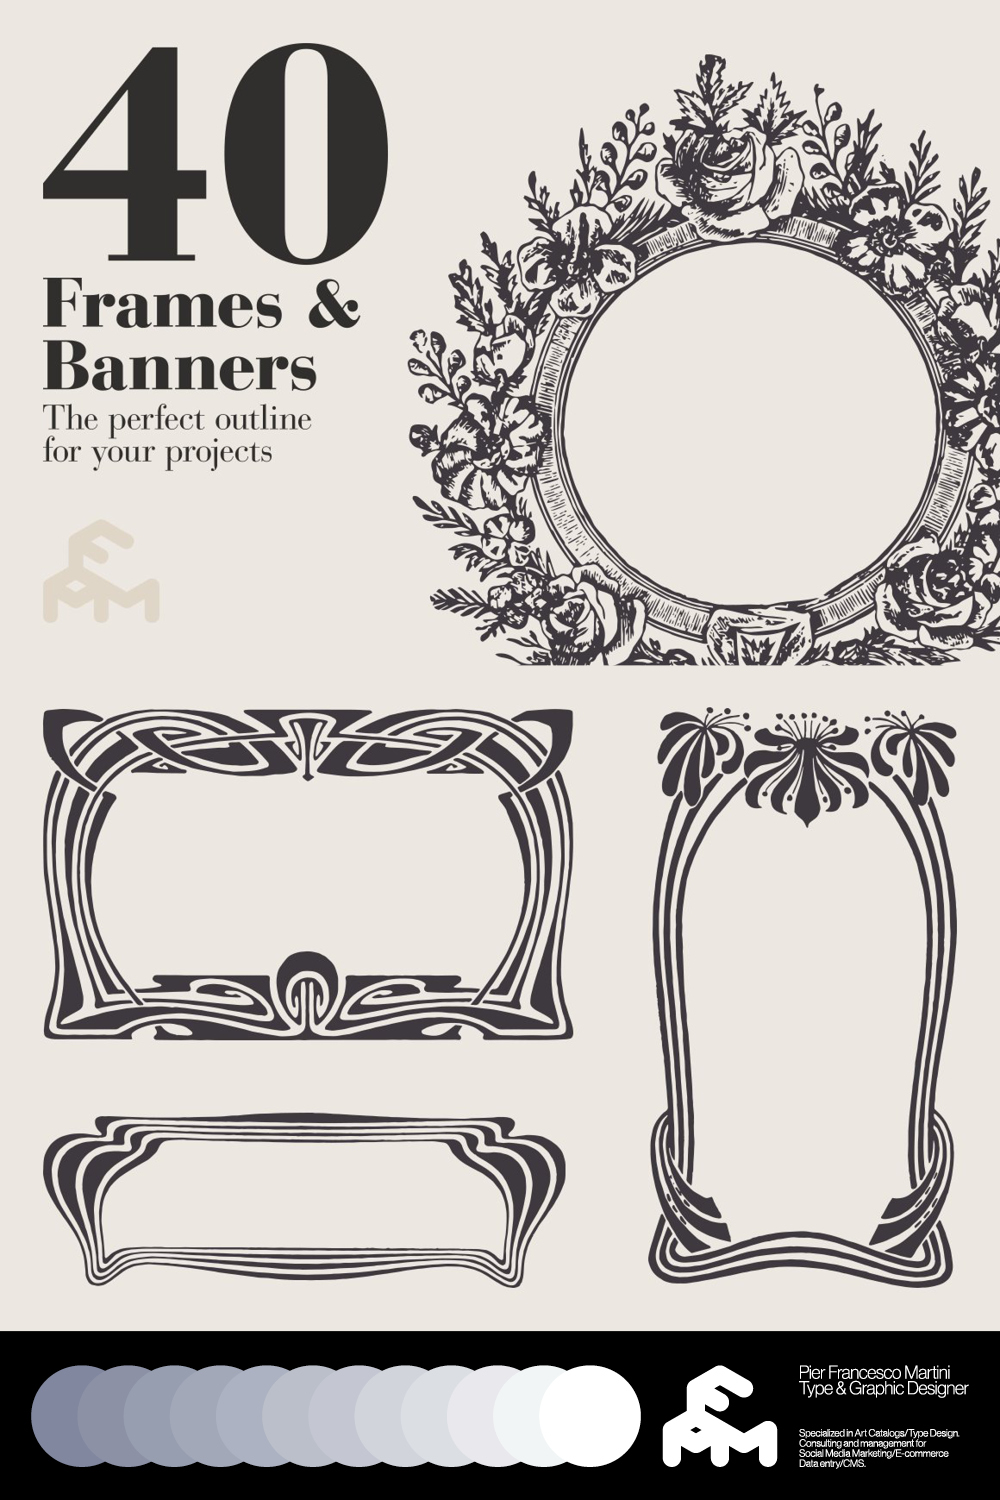 40 Frames & Banners pinterest image.